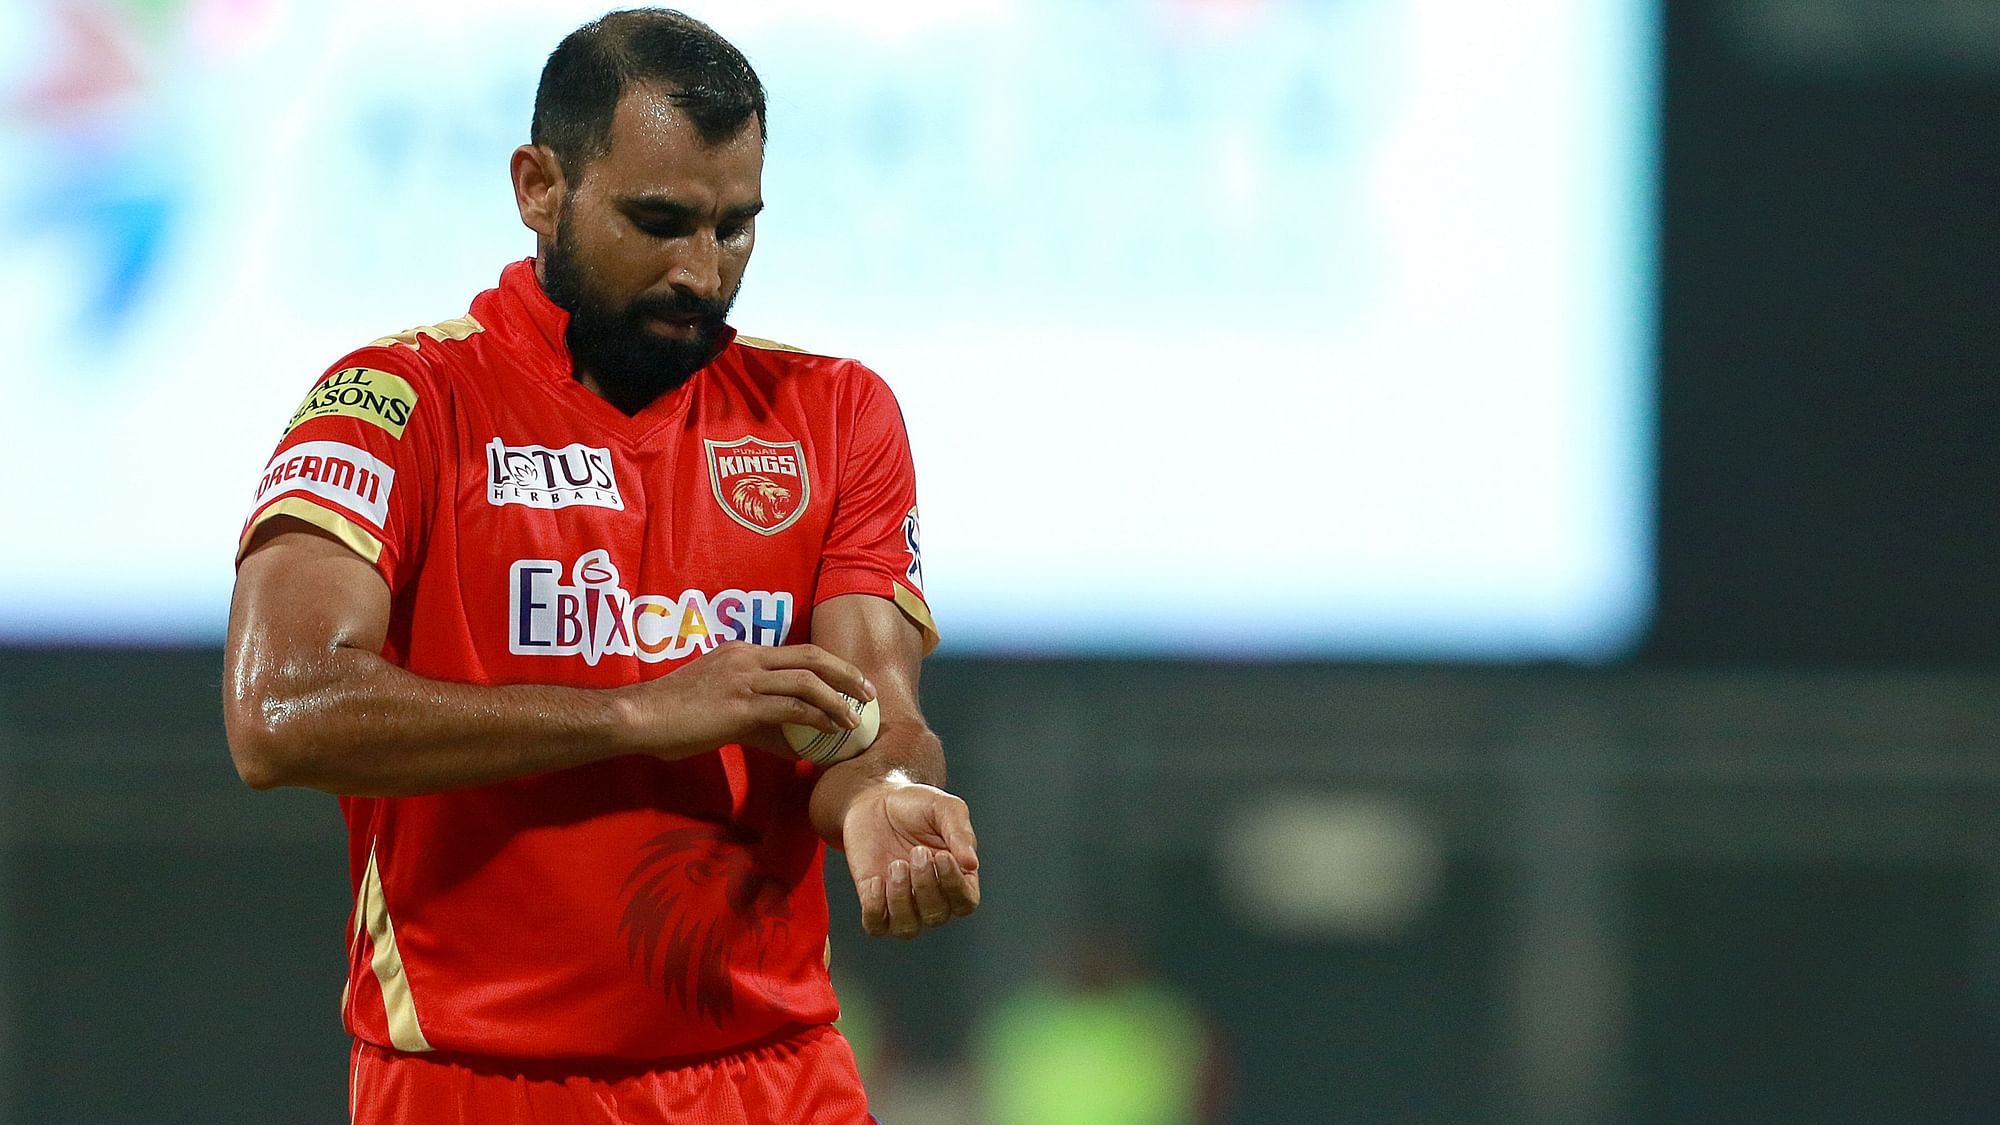 IPL Helped Get my Rhythm Back After Injury Layoff: Mohammed Shami